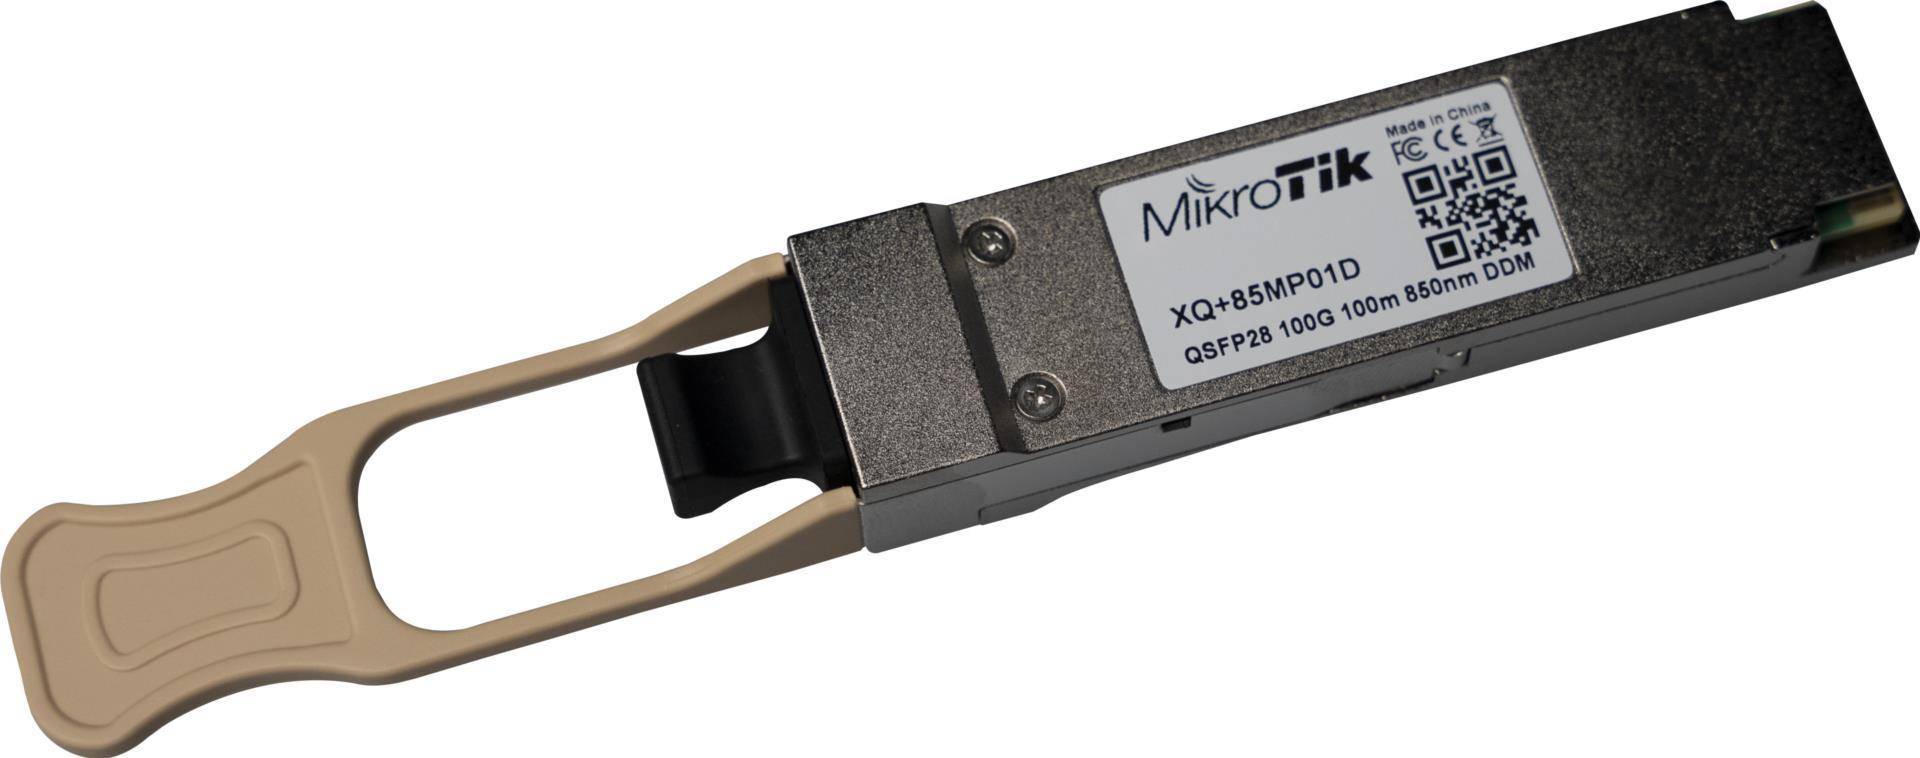 Mikrotik XQ+85MP01D Netzwerk-Transceiver-Modul Faseroptik 100000 Mbit/s QSFP28 850 nm (XQ+85MP01D) von MikroTik